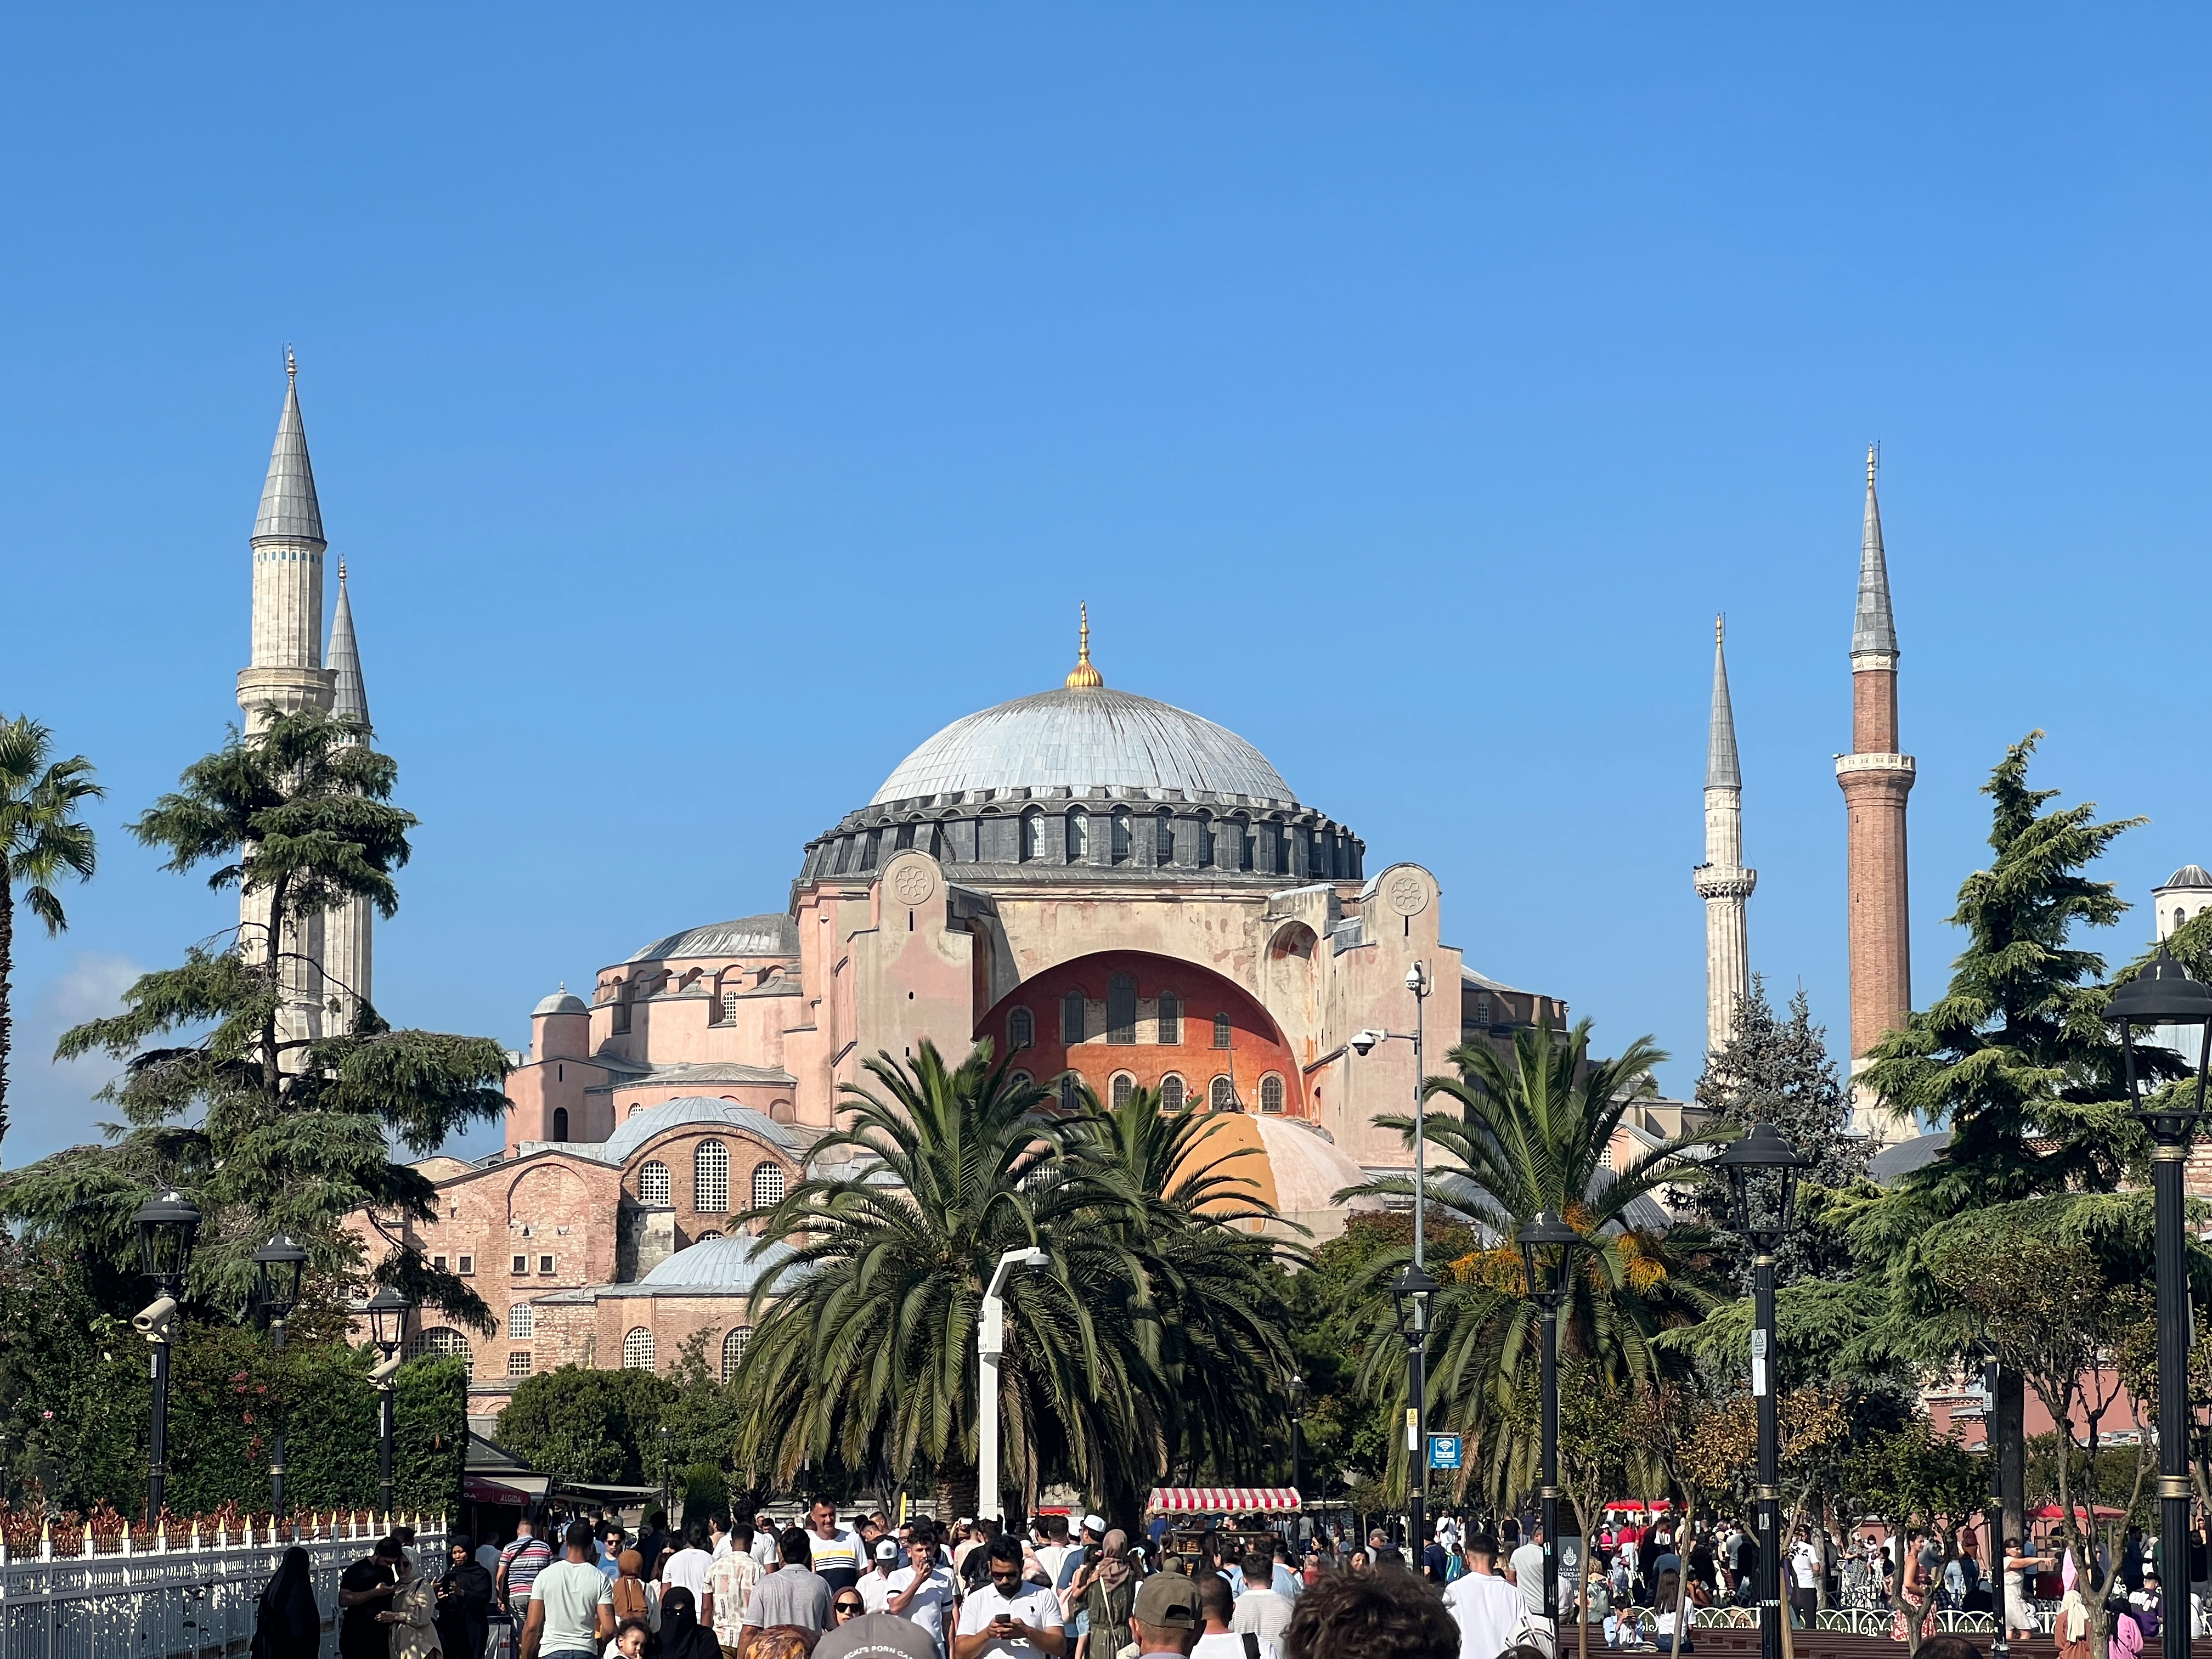 View of the Hagia Sophia